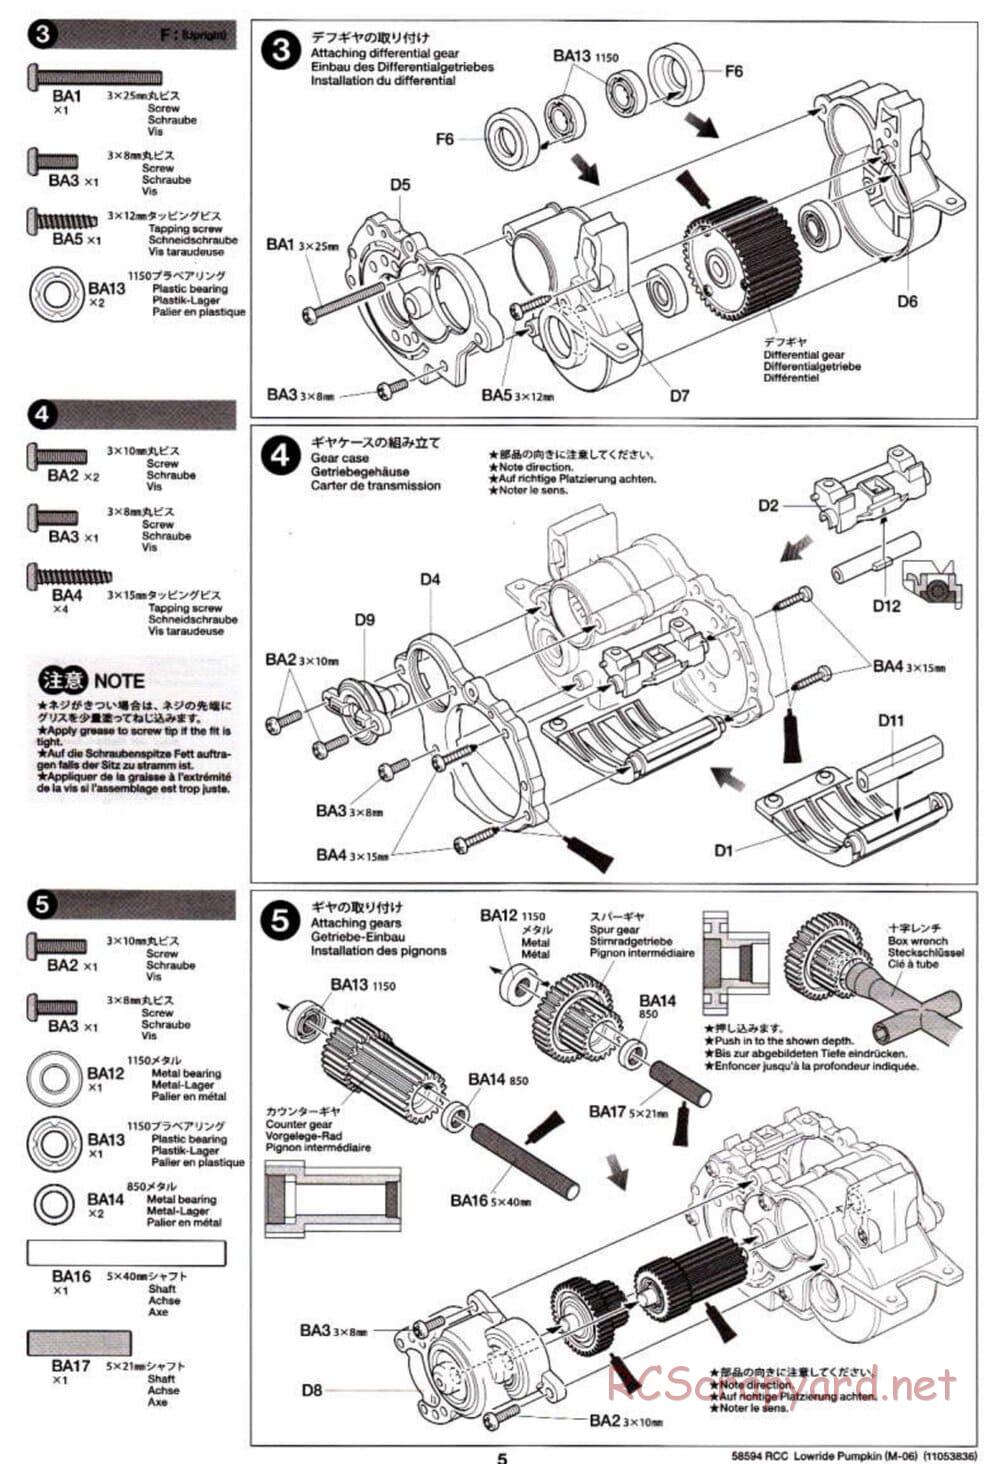 Tamiya - Lowride Pumpkin - M-06 Chassis - Manual - Page 5